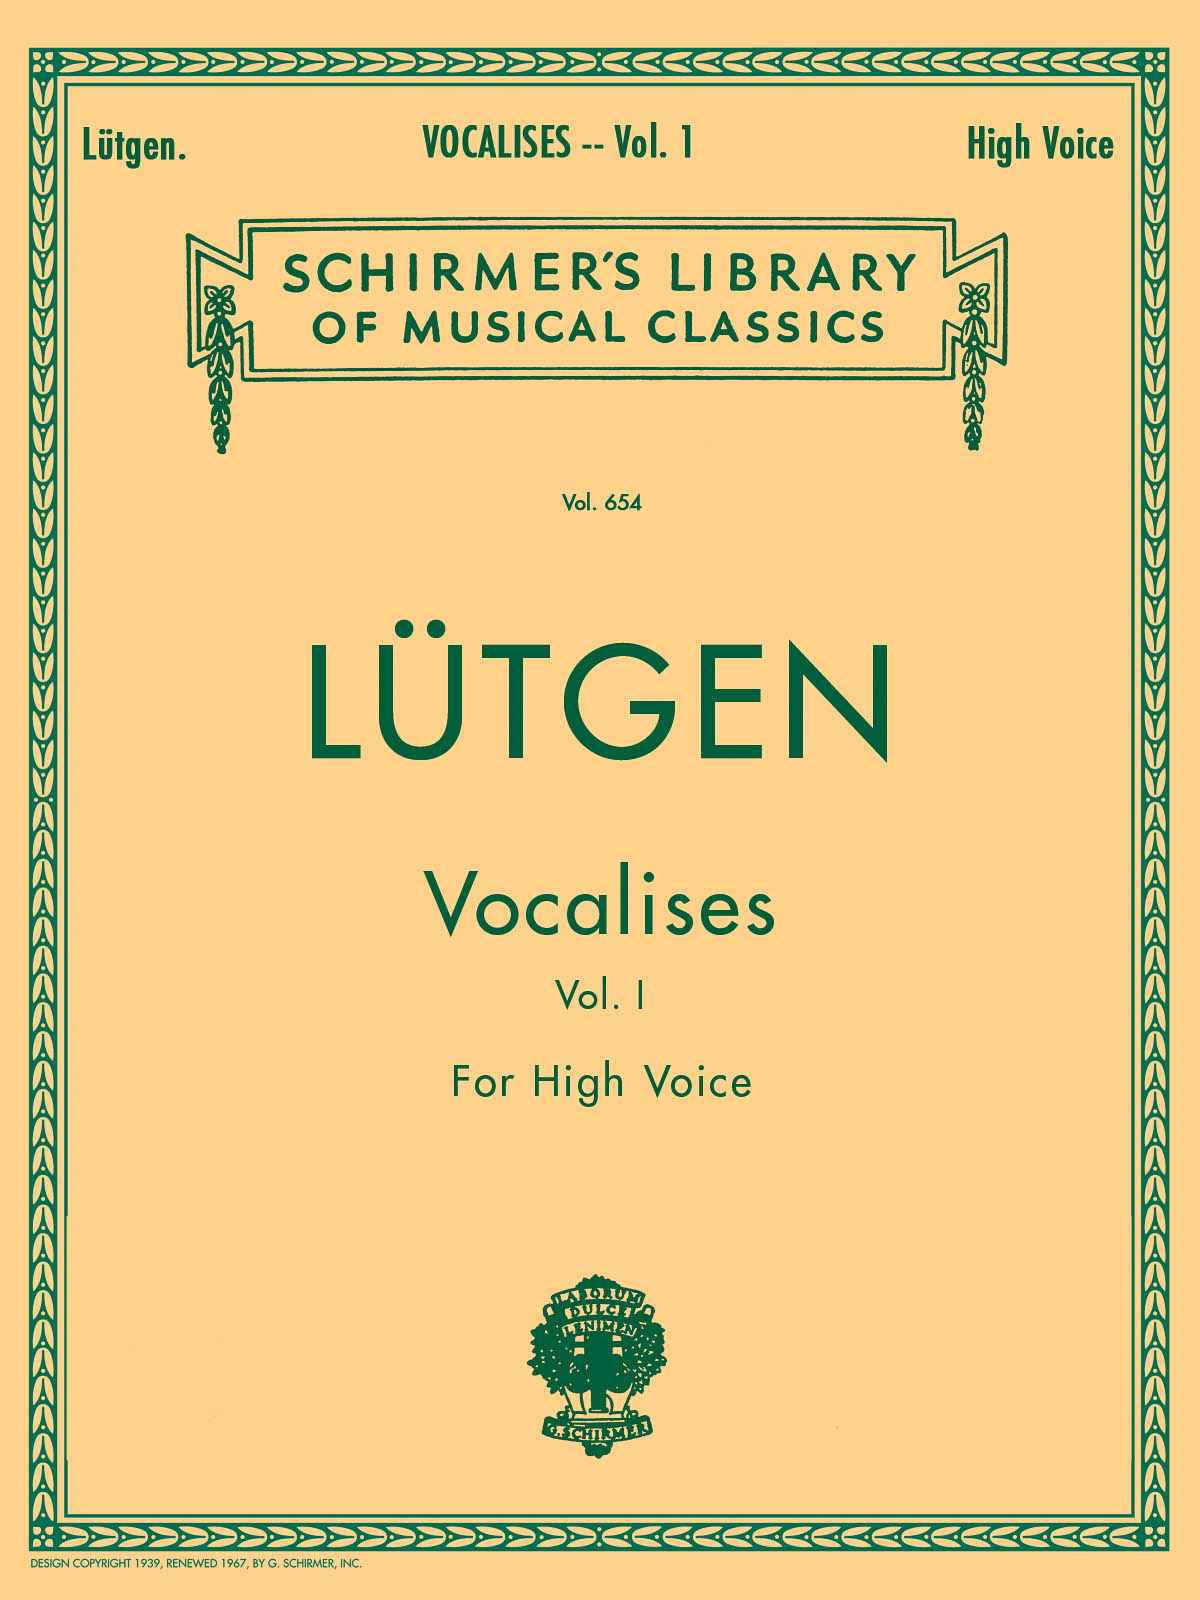 Lutgen: Vocalises Book 1 (Sopraan - High Voice)- 20 Daily Exercises